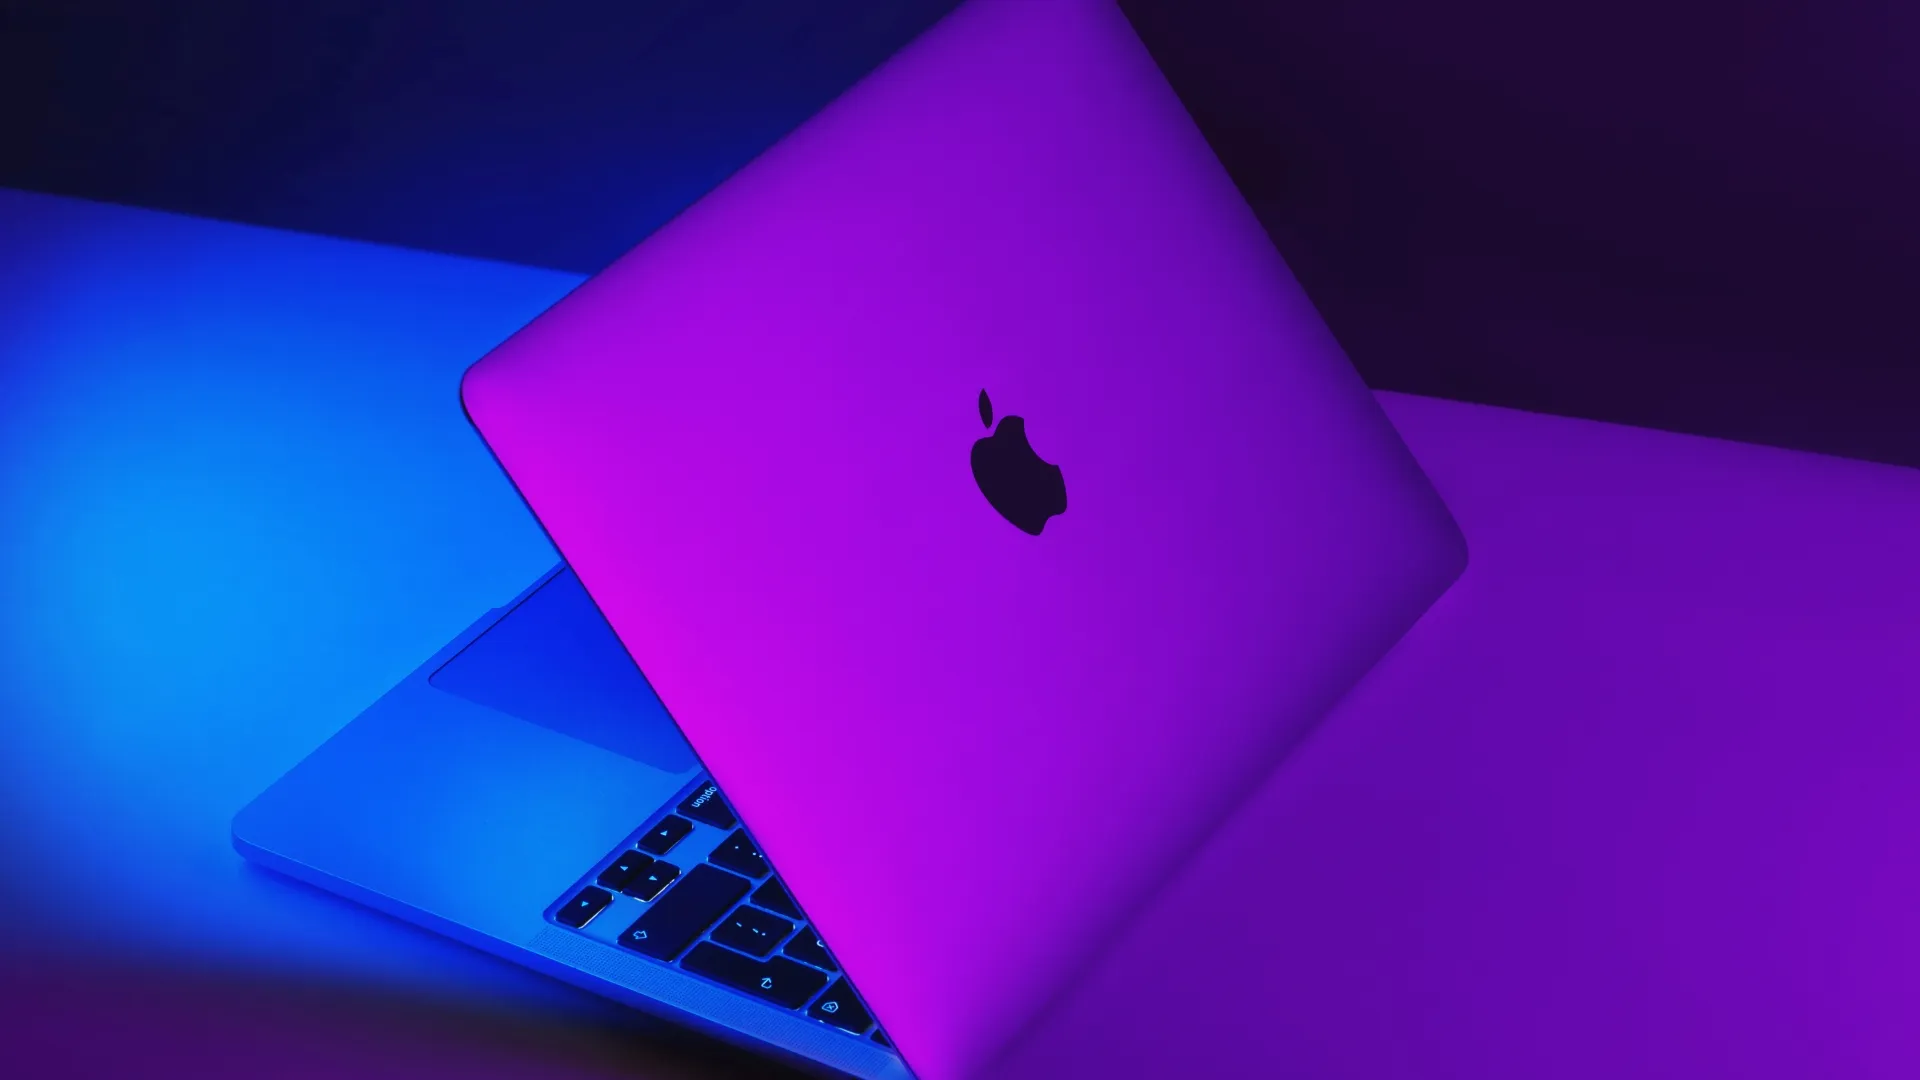 Izmir, Turkey - January 10, 2022: Half opened Apple Brand M1 Model Macbook pro laptop computer with purple and blue colored lights.